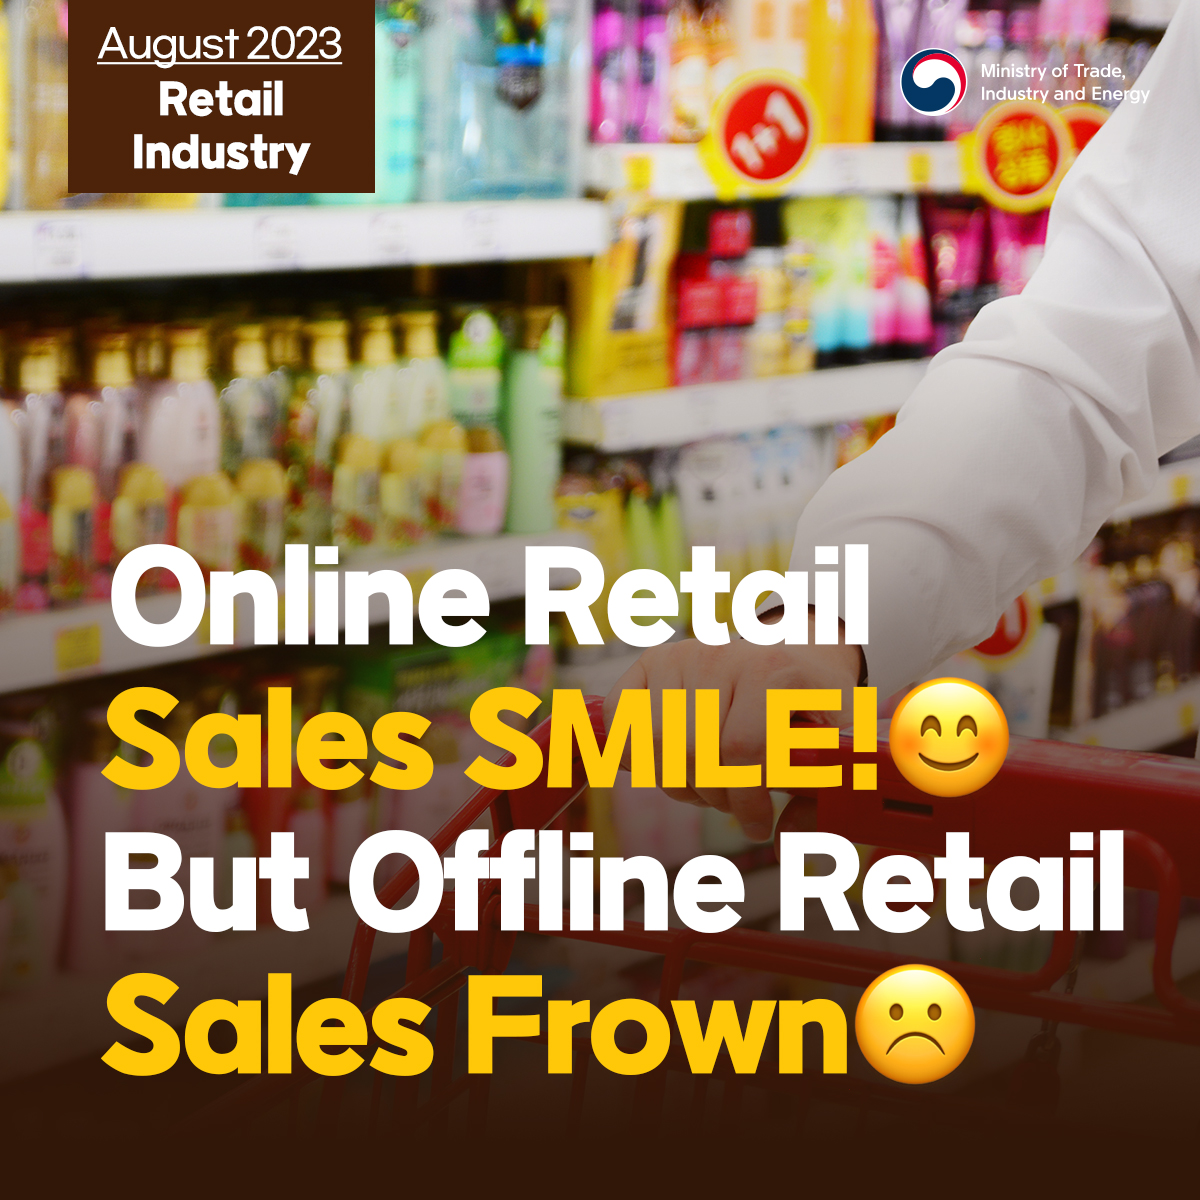 Online retail sales smile, offline sales frown